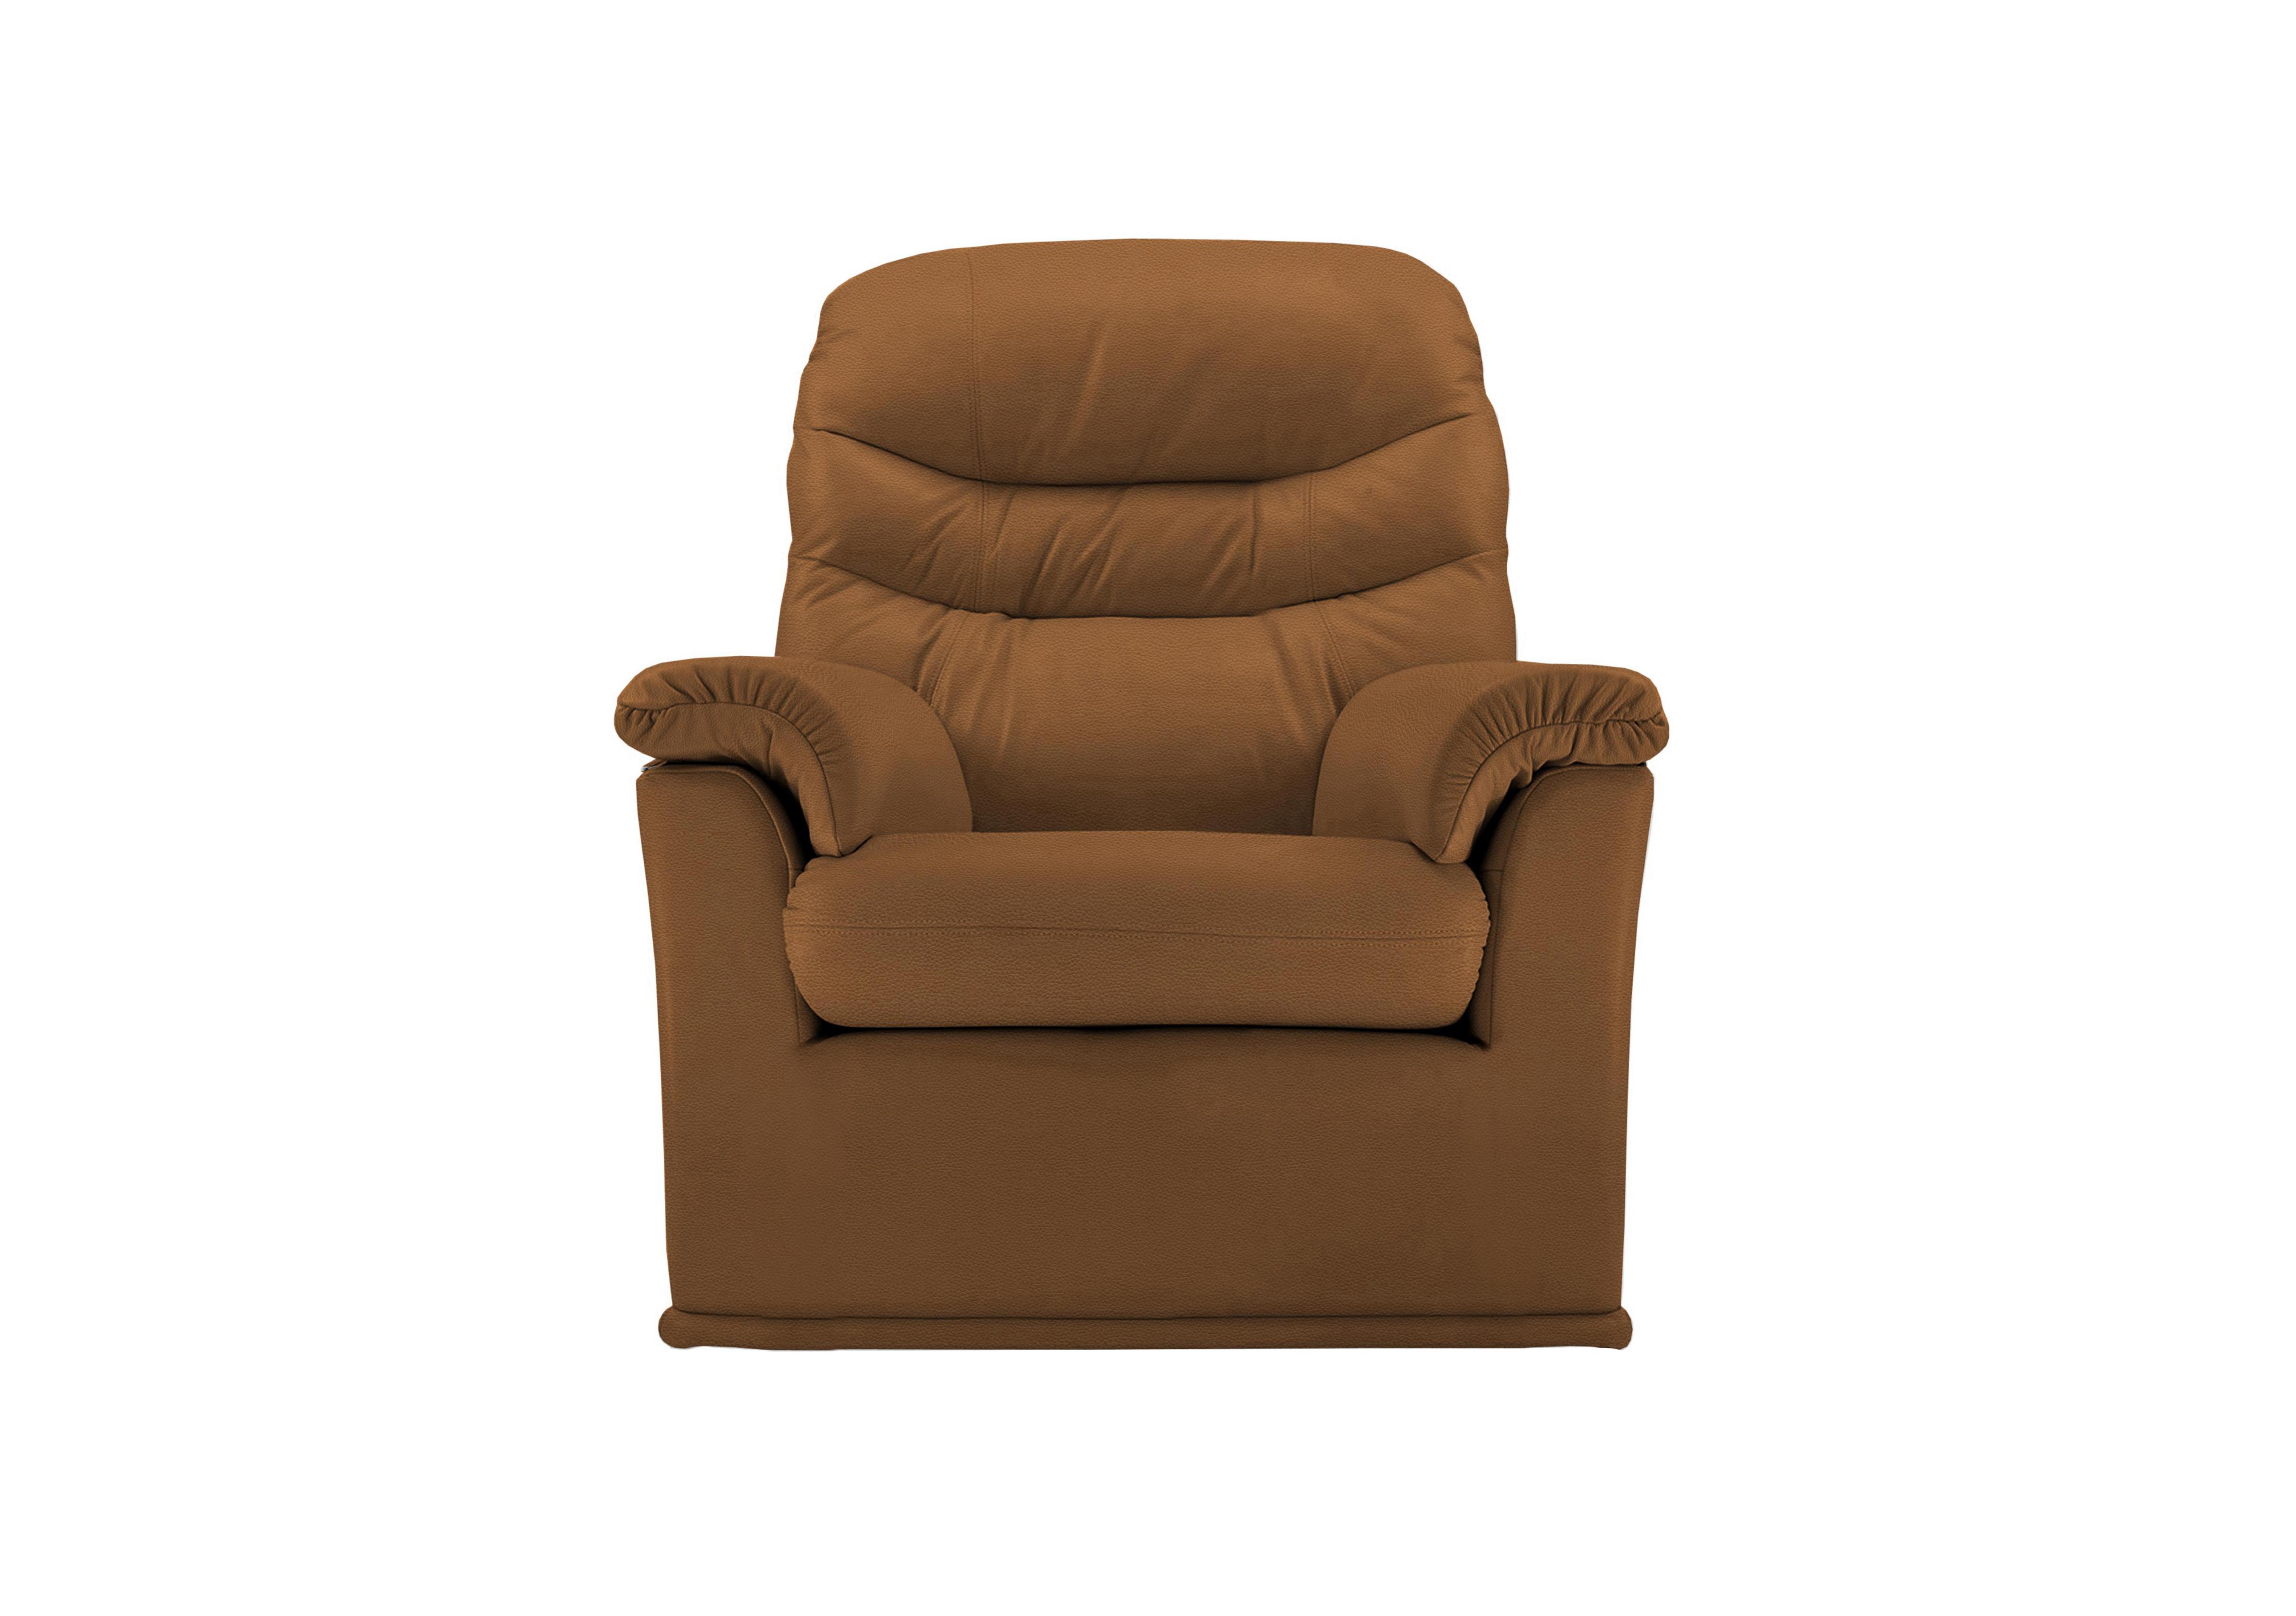 Malvern Leather Armchair in L847 Cambridge Tan on Furniture Village